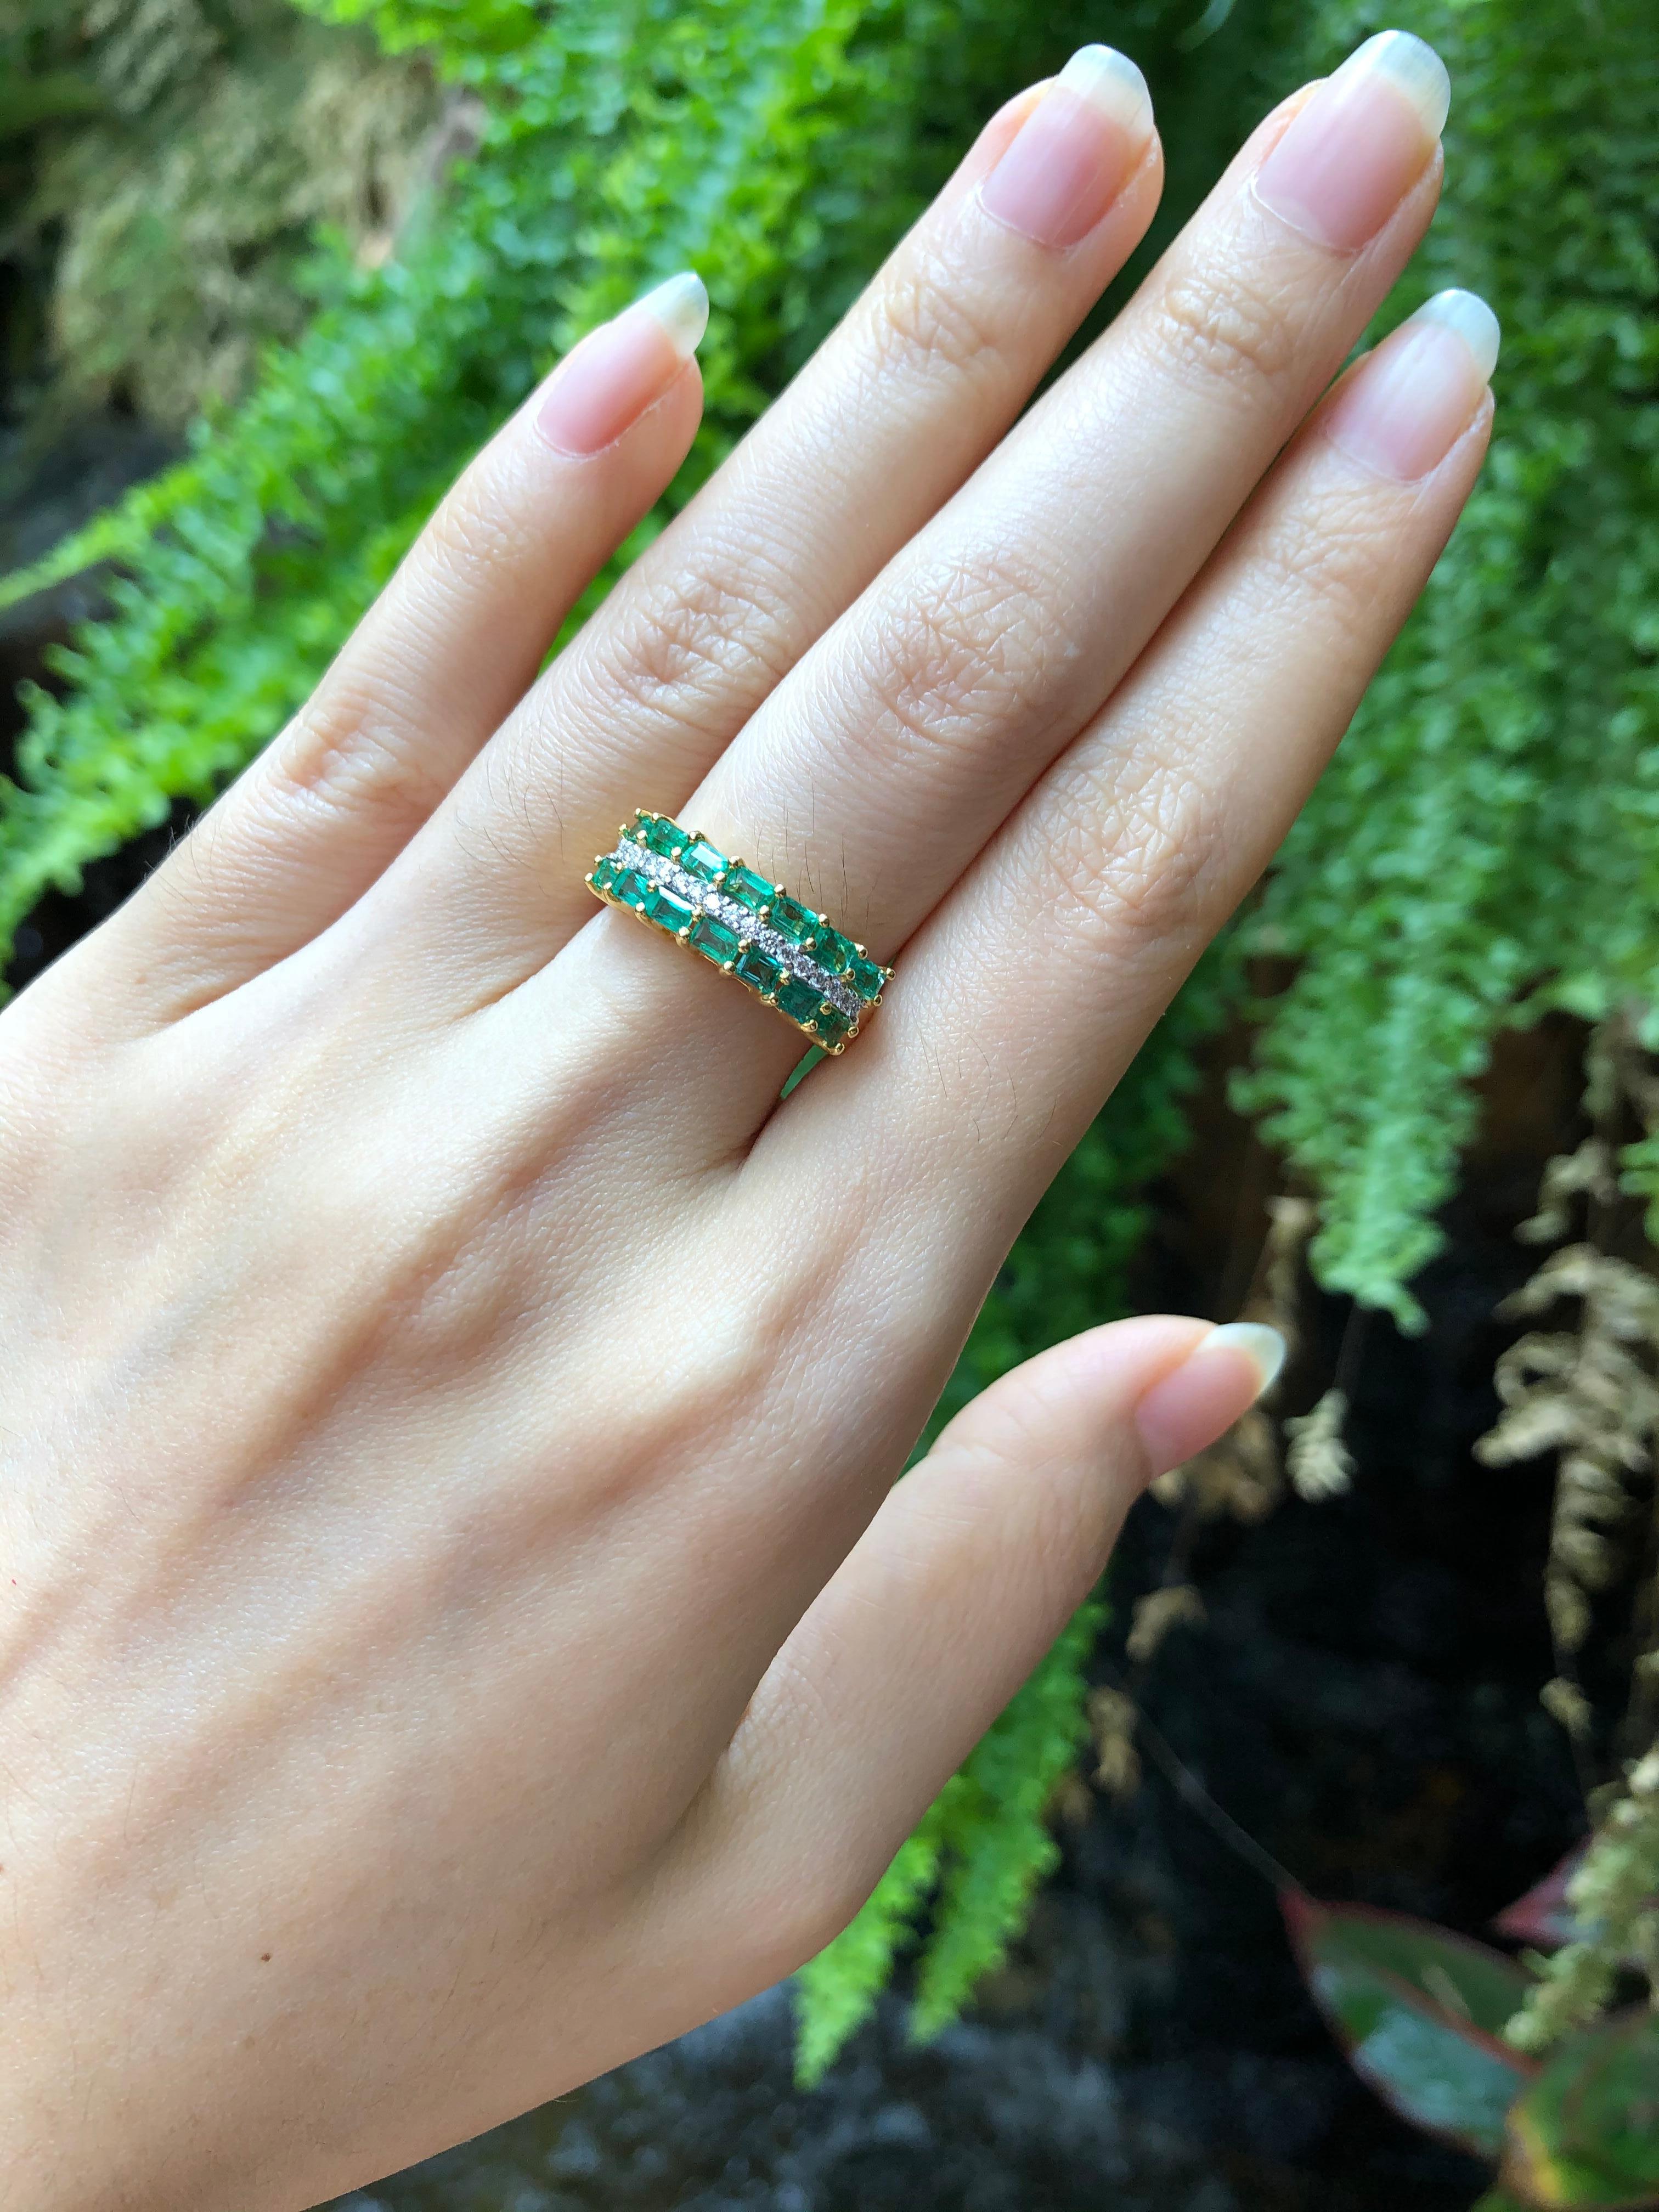 Emerald 0.99 carat with Diamond 0.16 carat Ring set in 18 Karat Gold Settings

Width:  1.9 cm 
Length: 0.6 cm
Ring Size: 54
Total Weight: 6.15 grams

